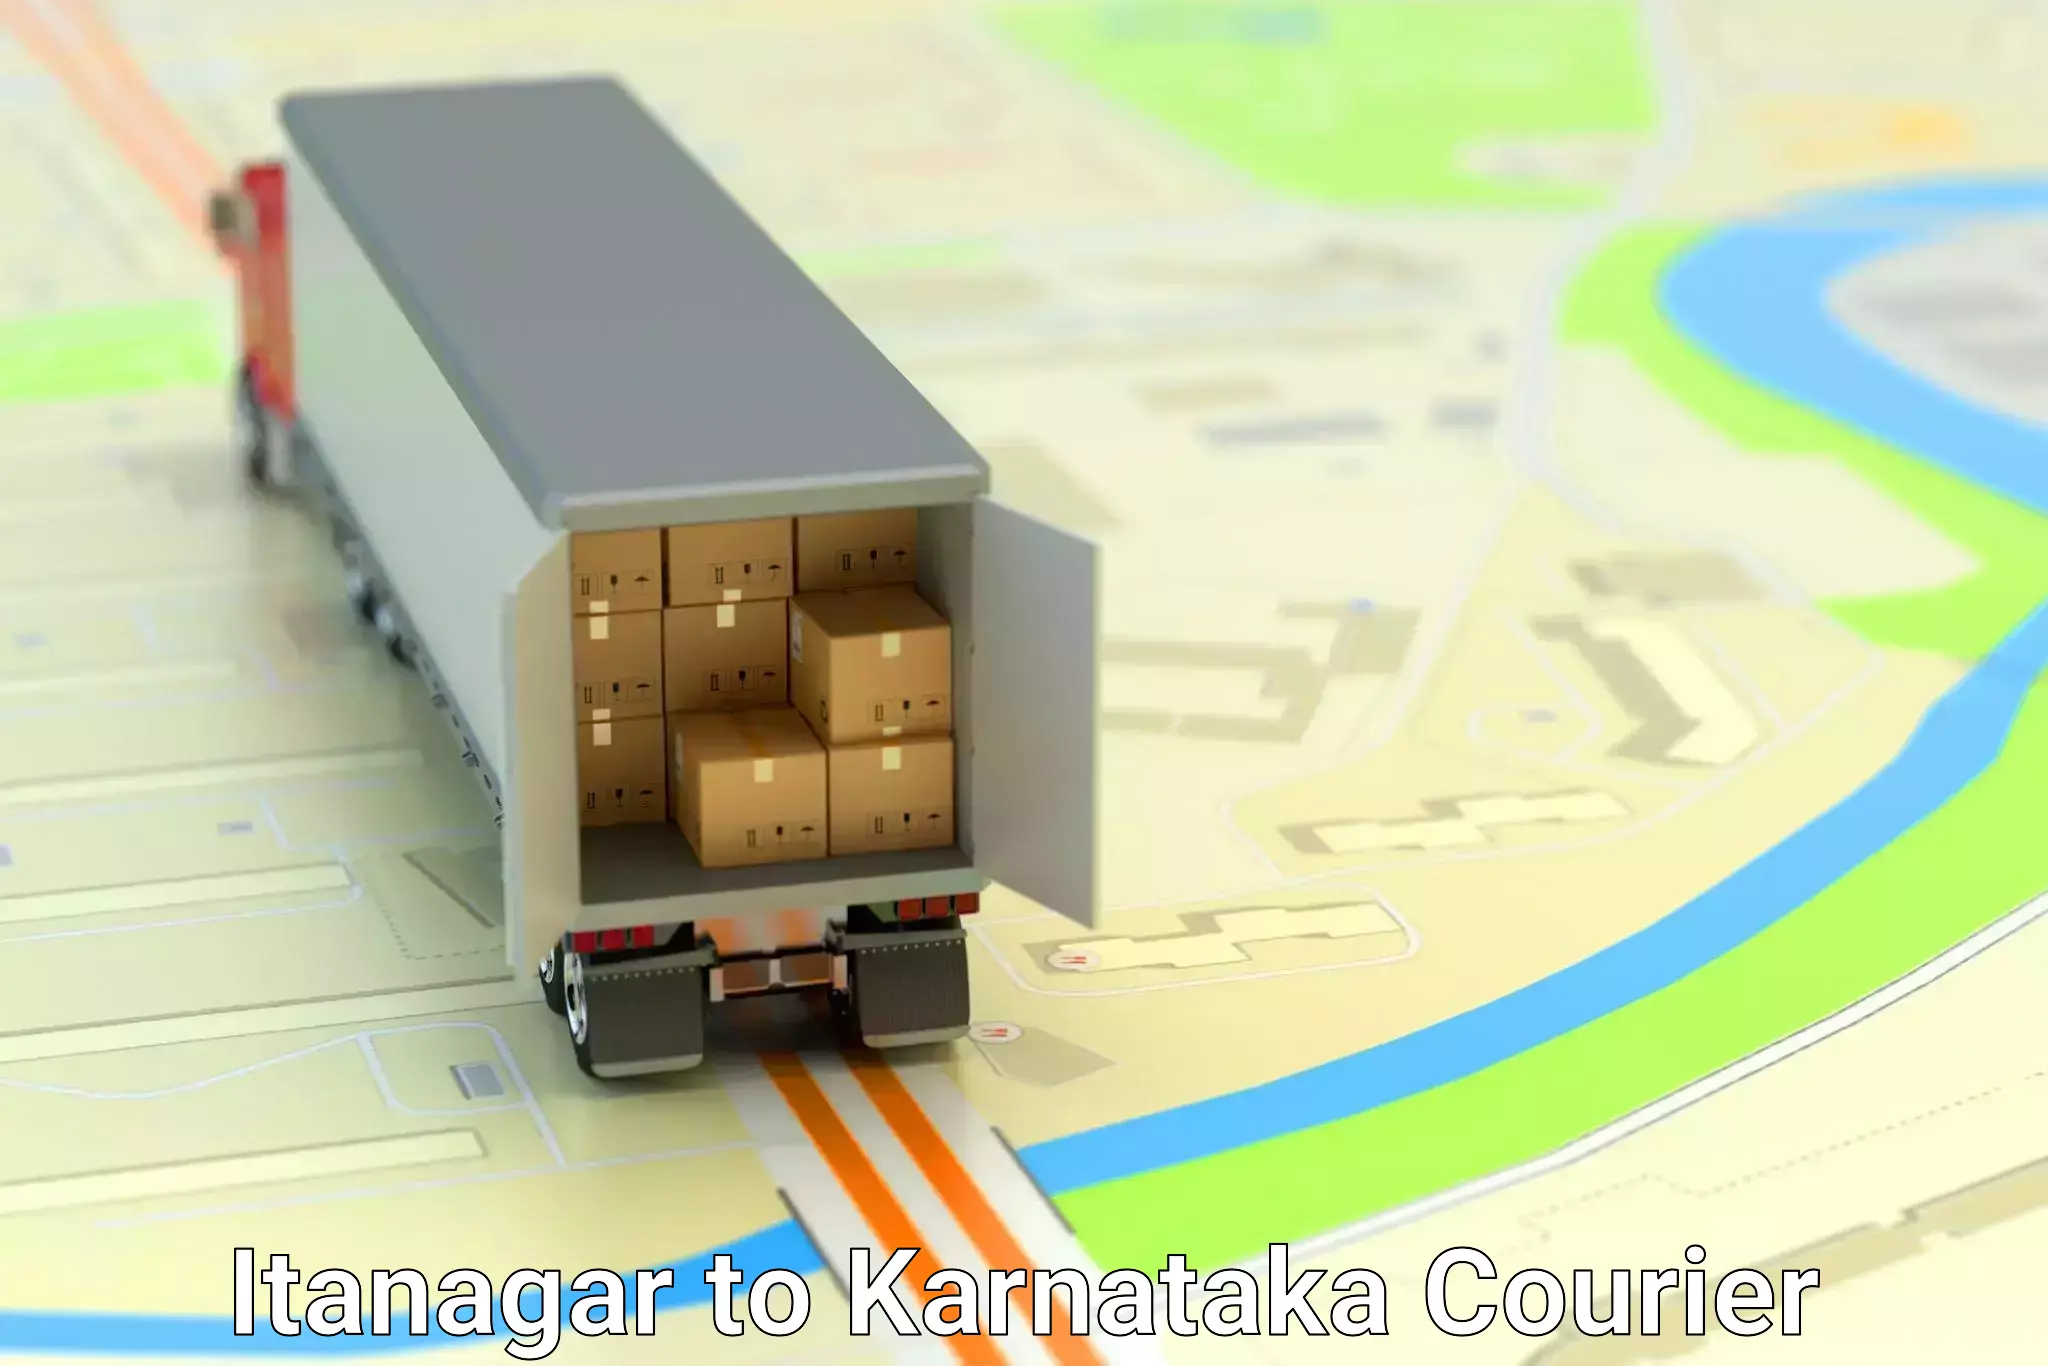 Global logistics network Itanagar to Maddur